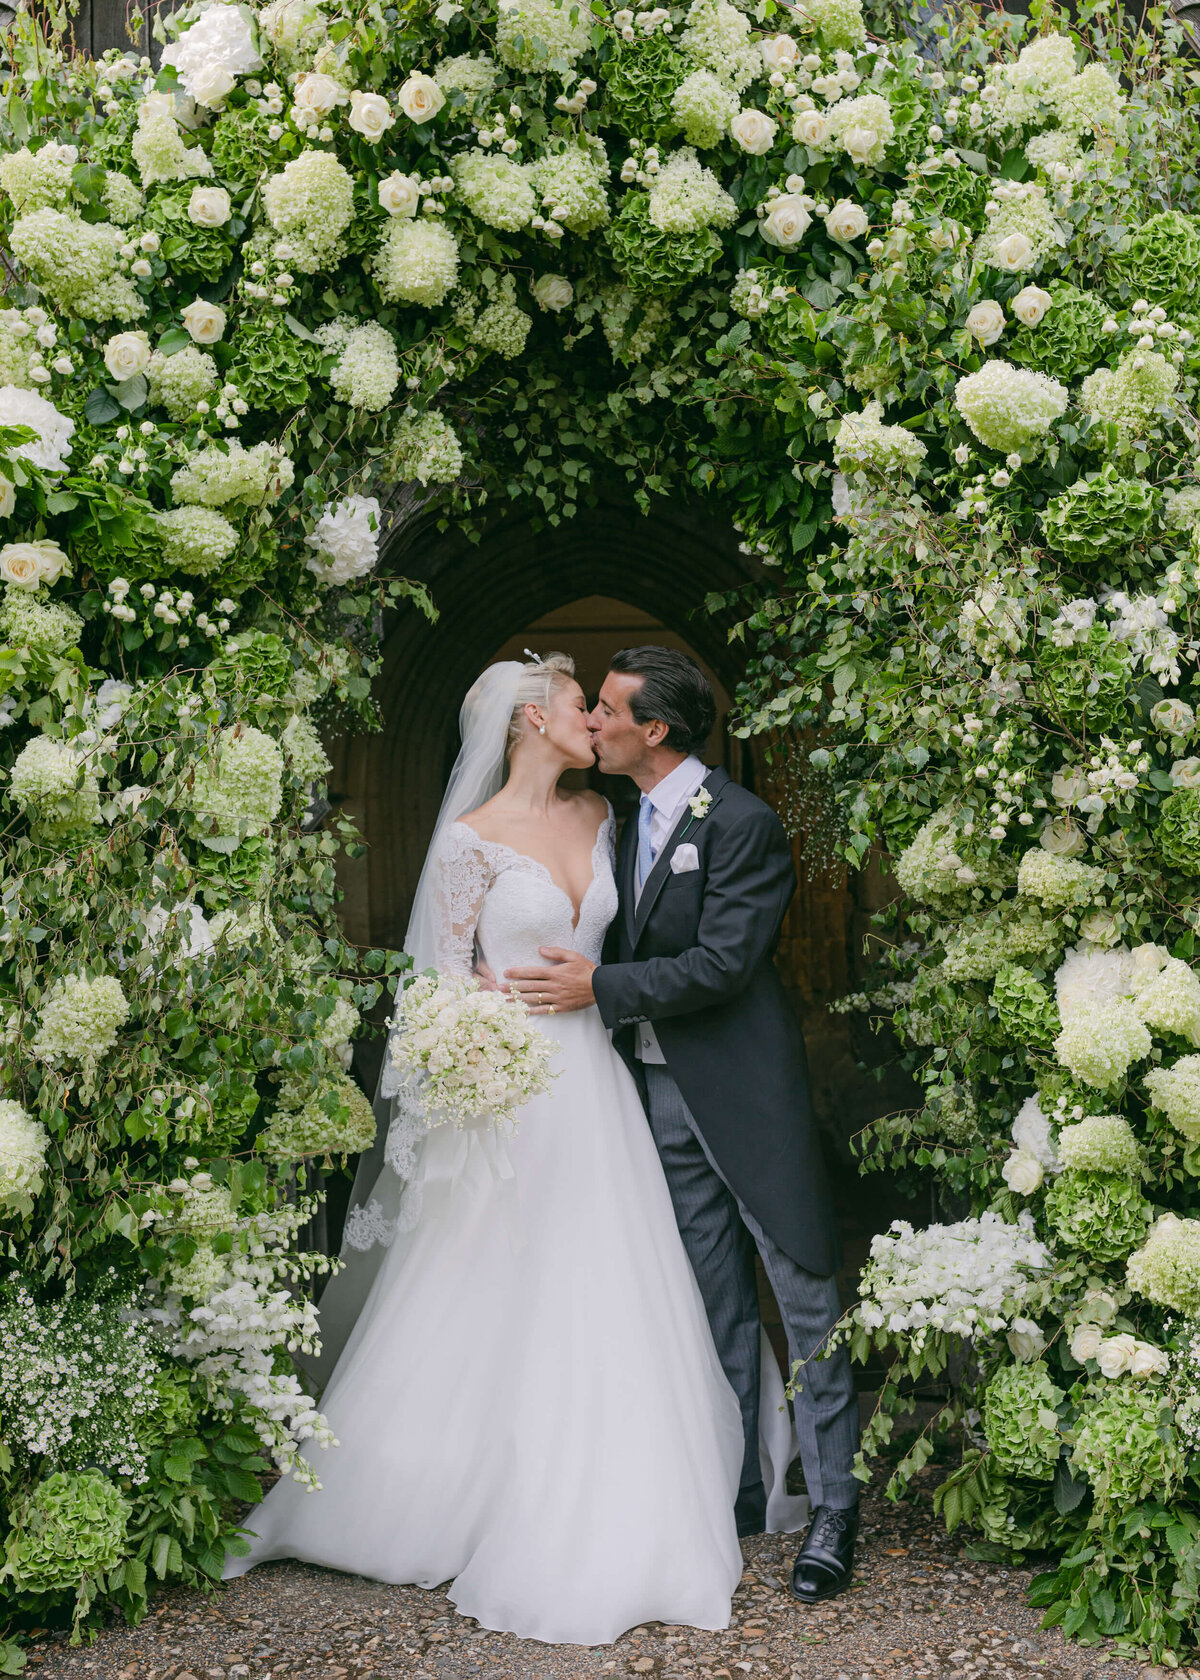 chloe-winstanley-weddings-hambleden-church-flower-arch-kiss-bride-groom